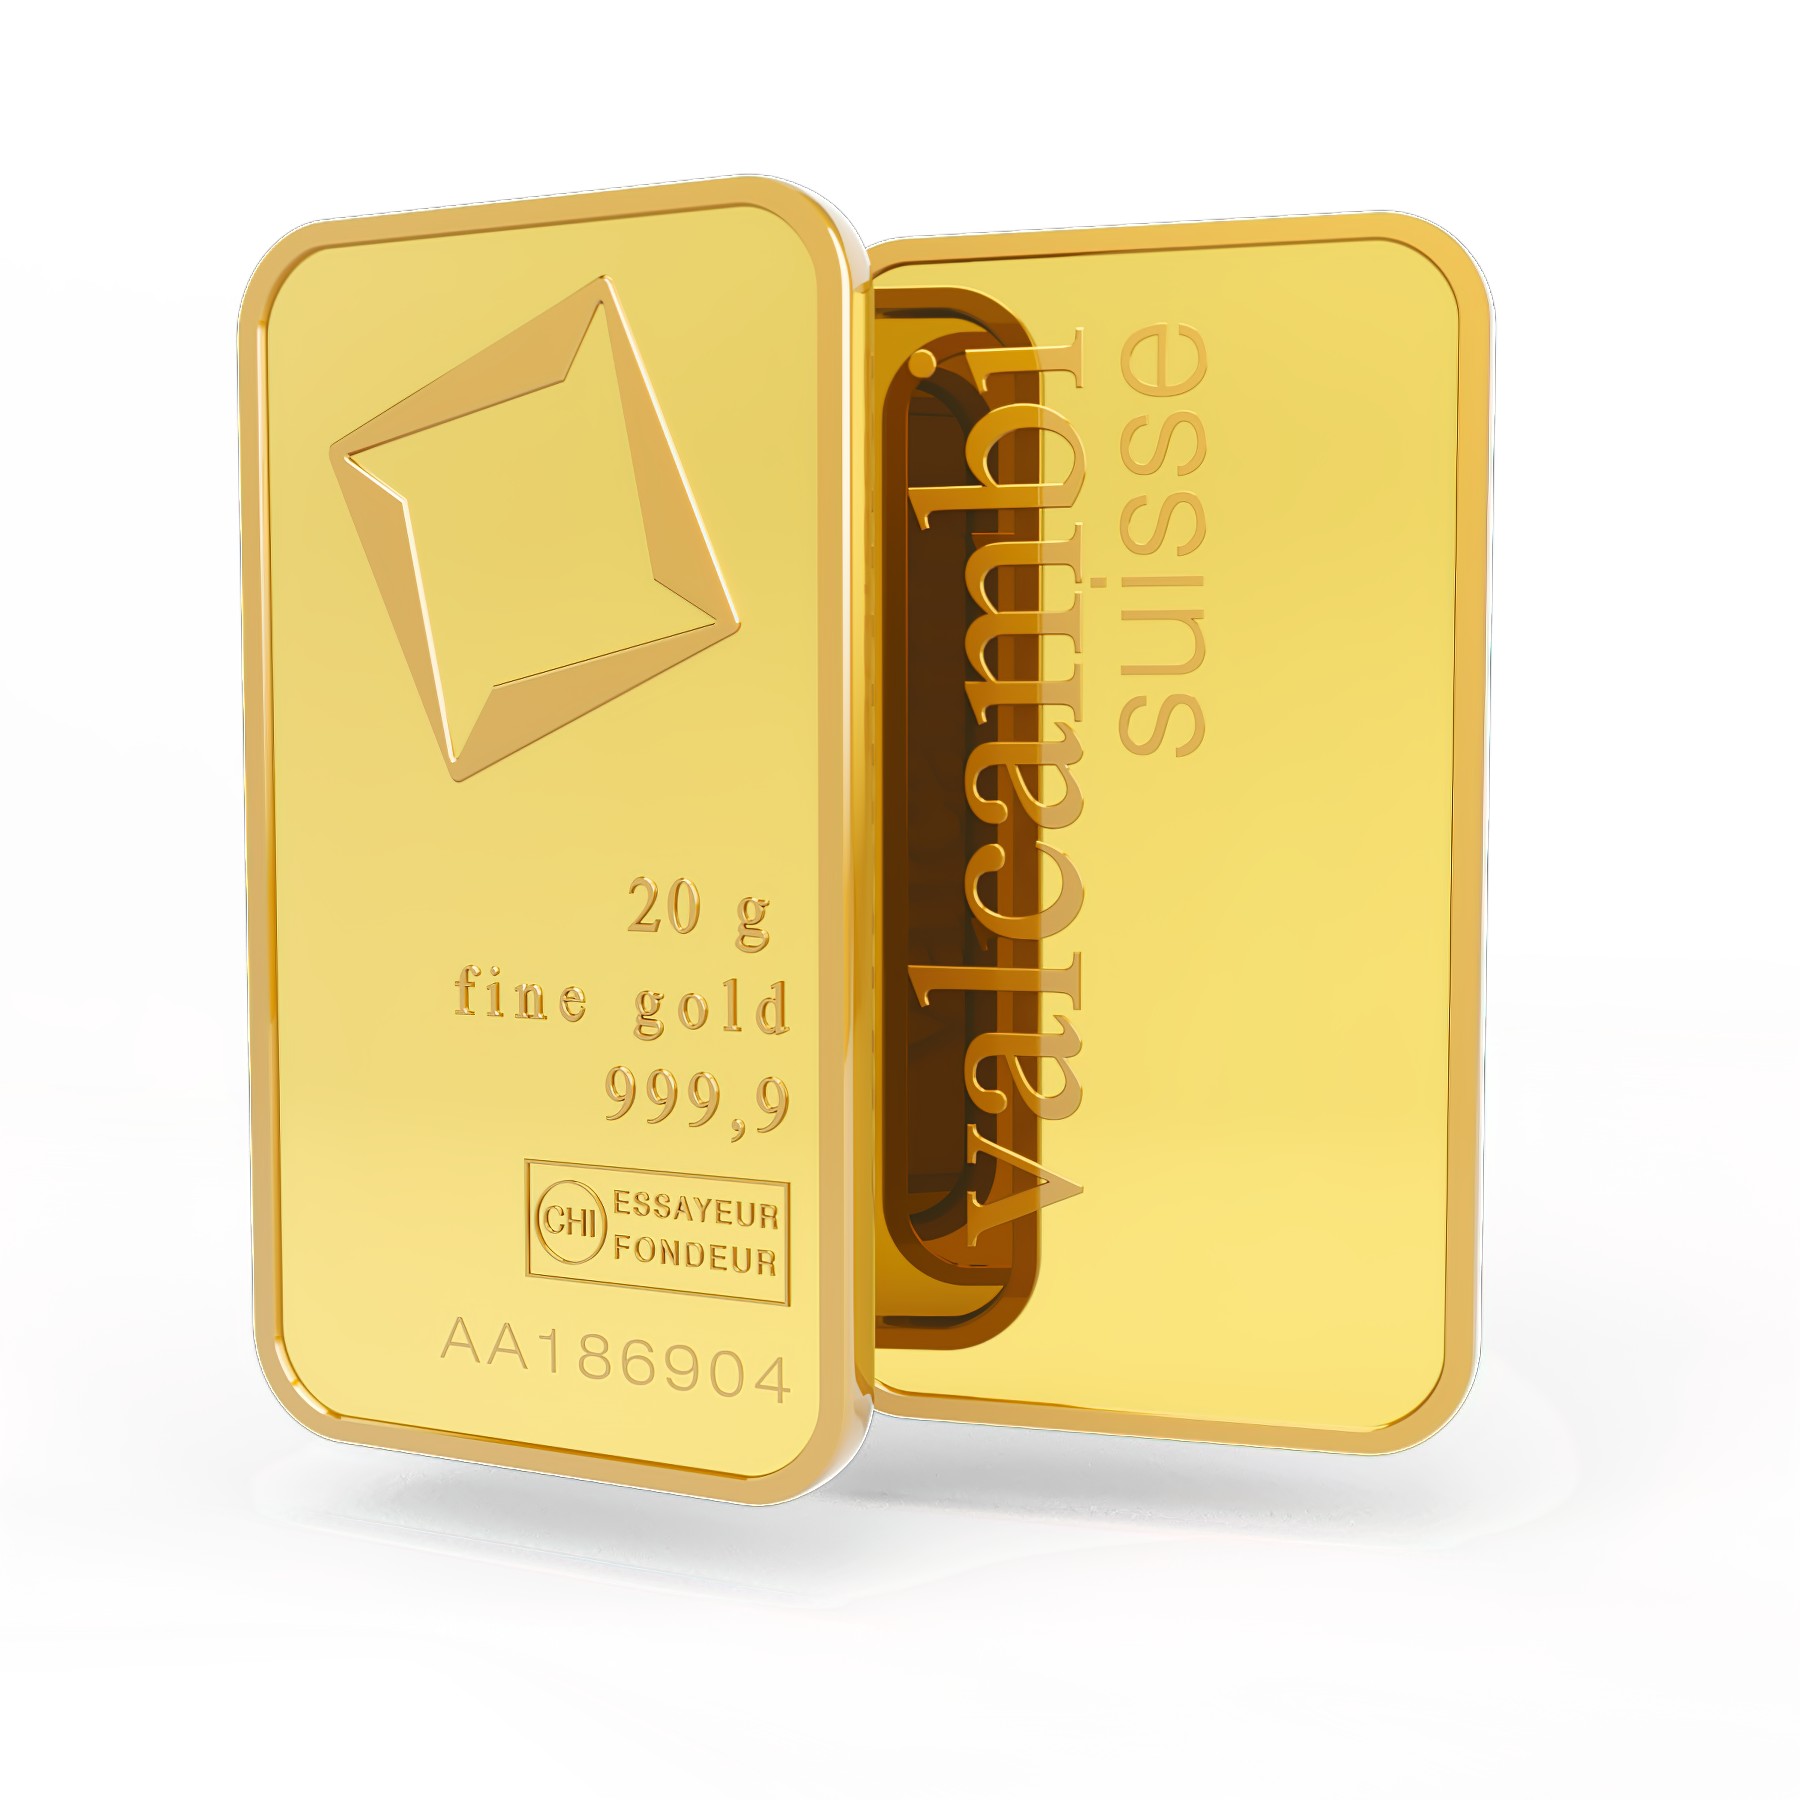 Aranyrúd 20gr, Svájc, Fine Gold 999,9